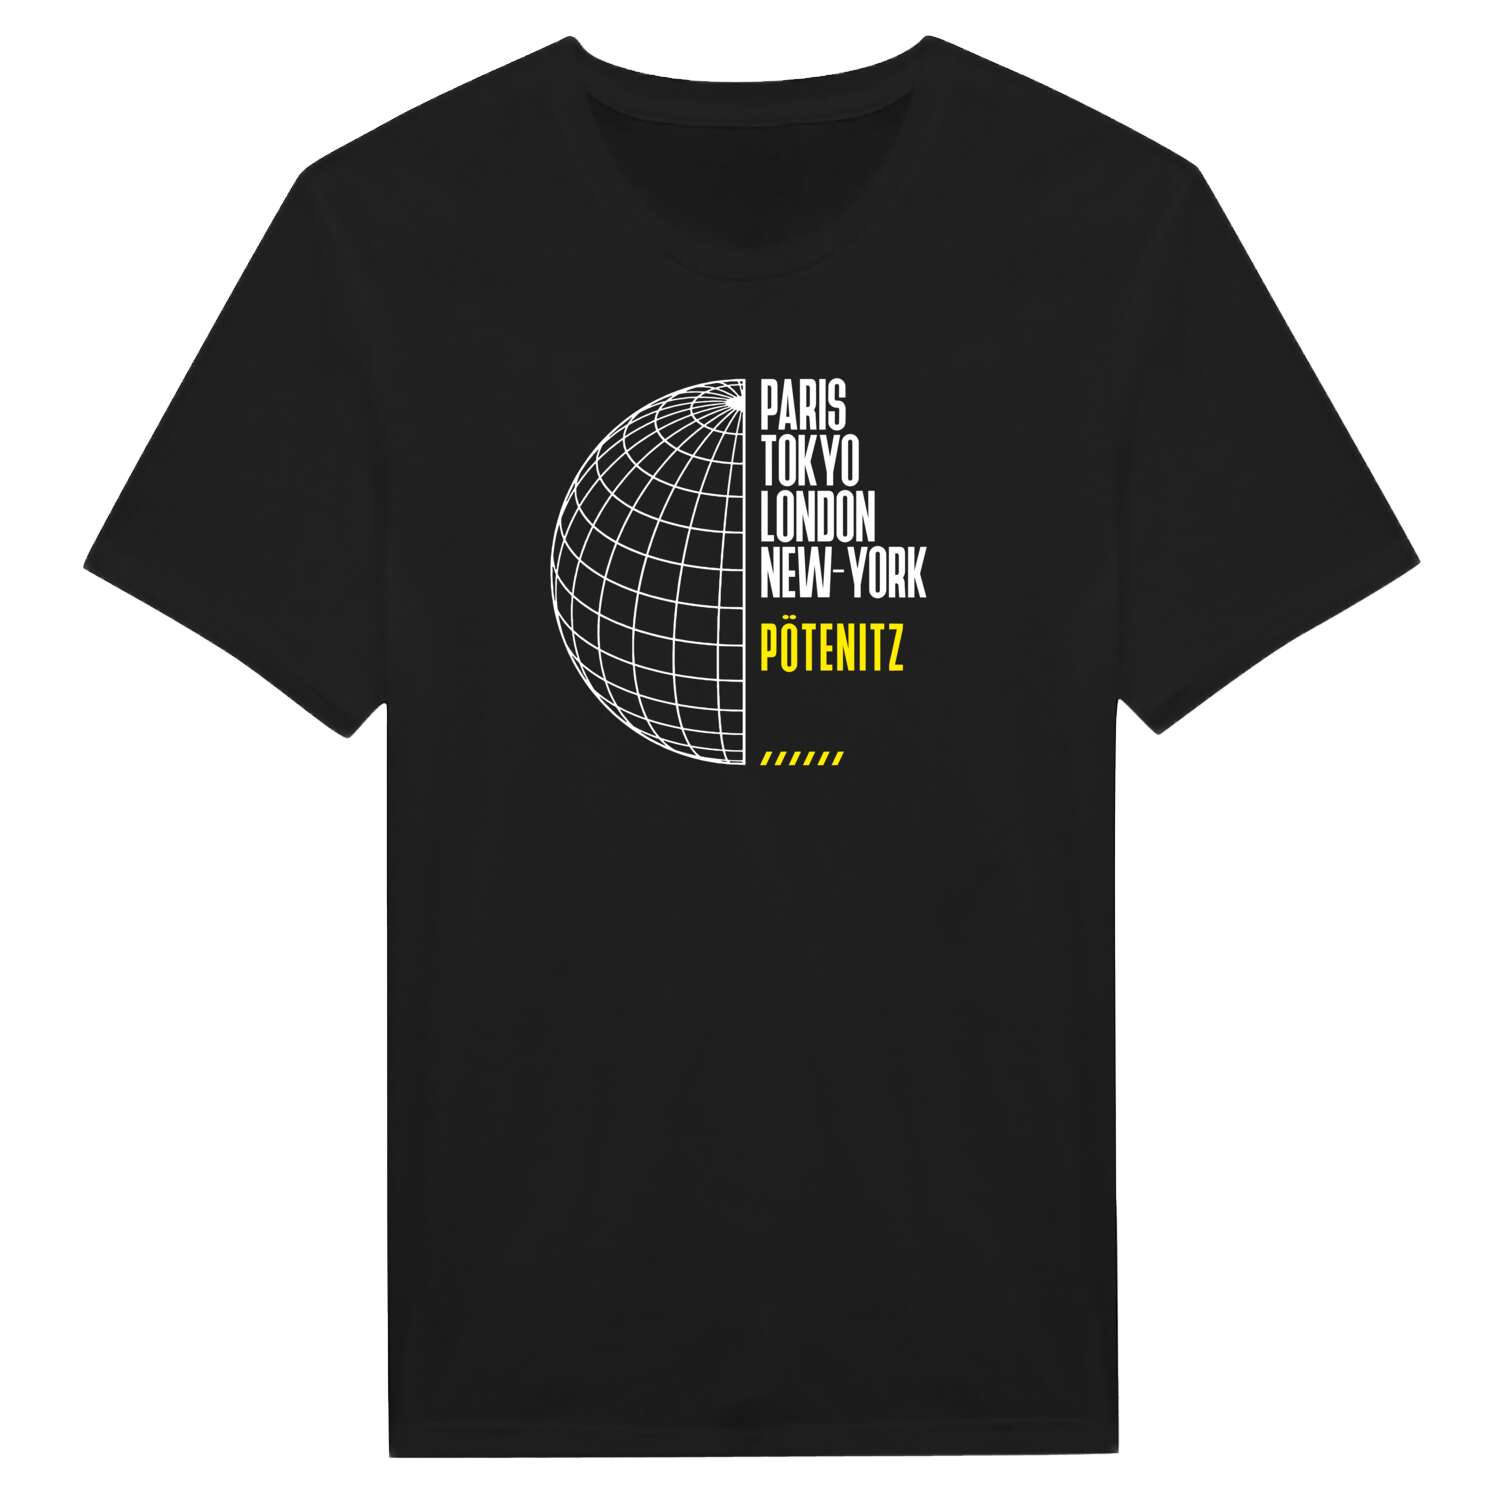 Pötenitz T-Shirt »Paris Tokyo London«